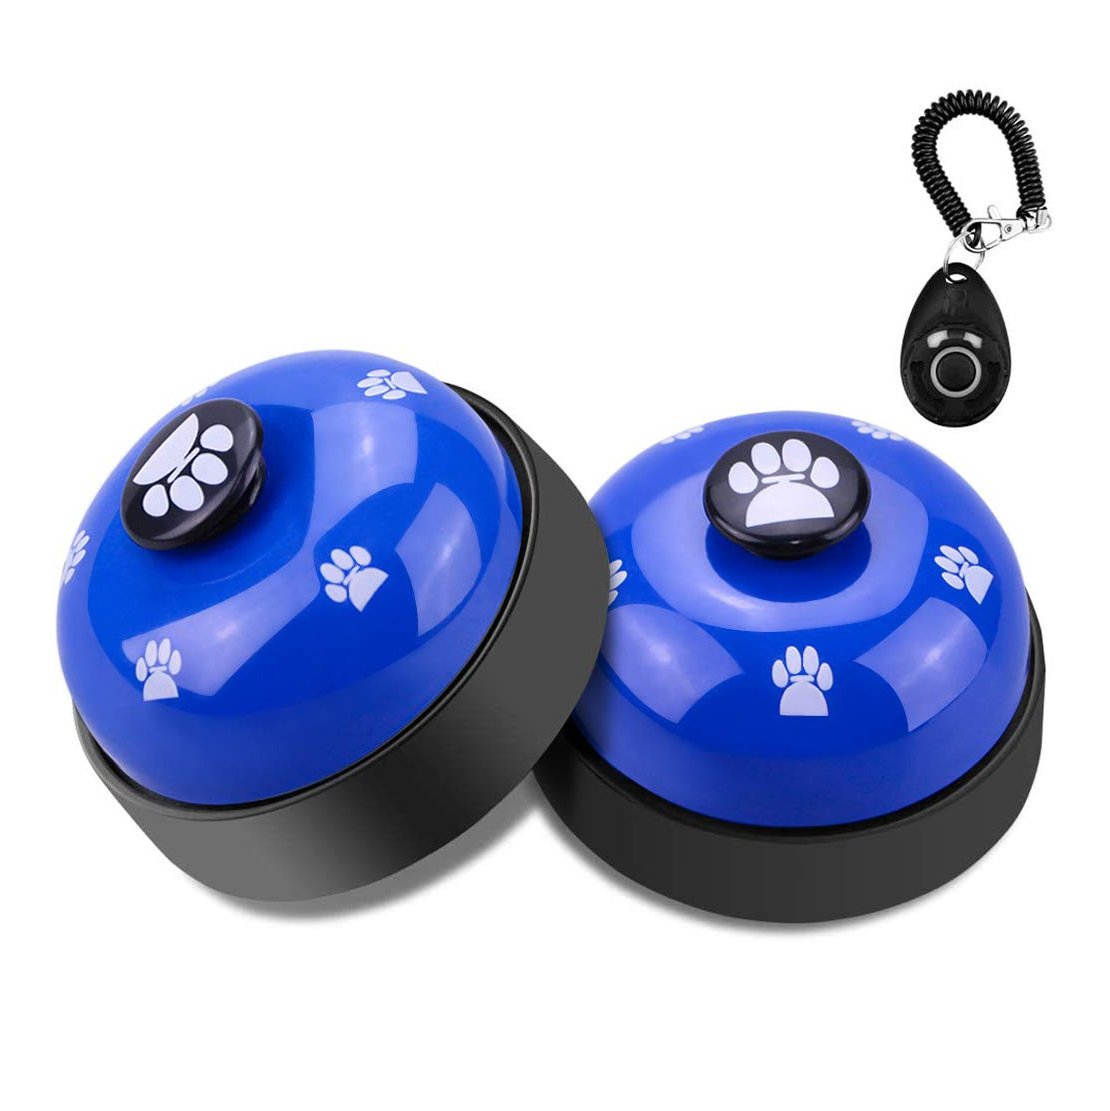 Non-Skid Rubber Base Dog Cat Door Bell Multi-color optional pet bell training bell